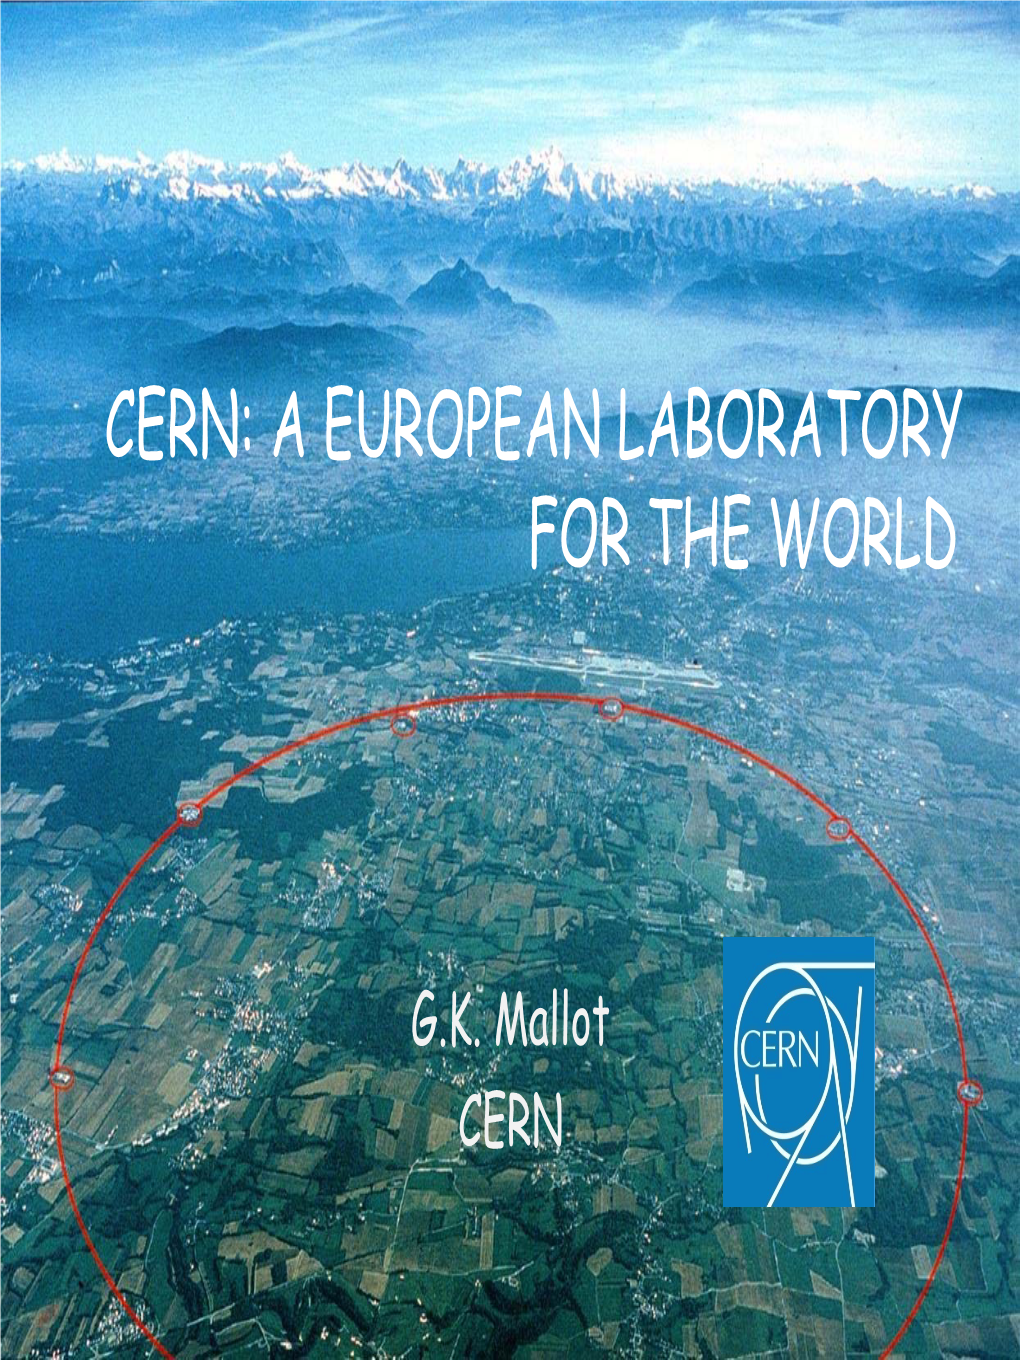 Cern: a European Laboratory for the World